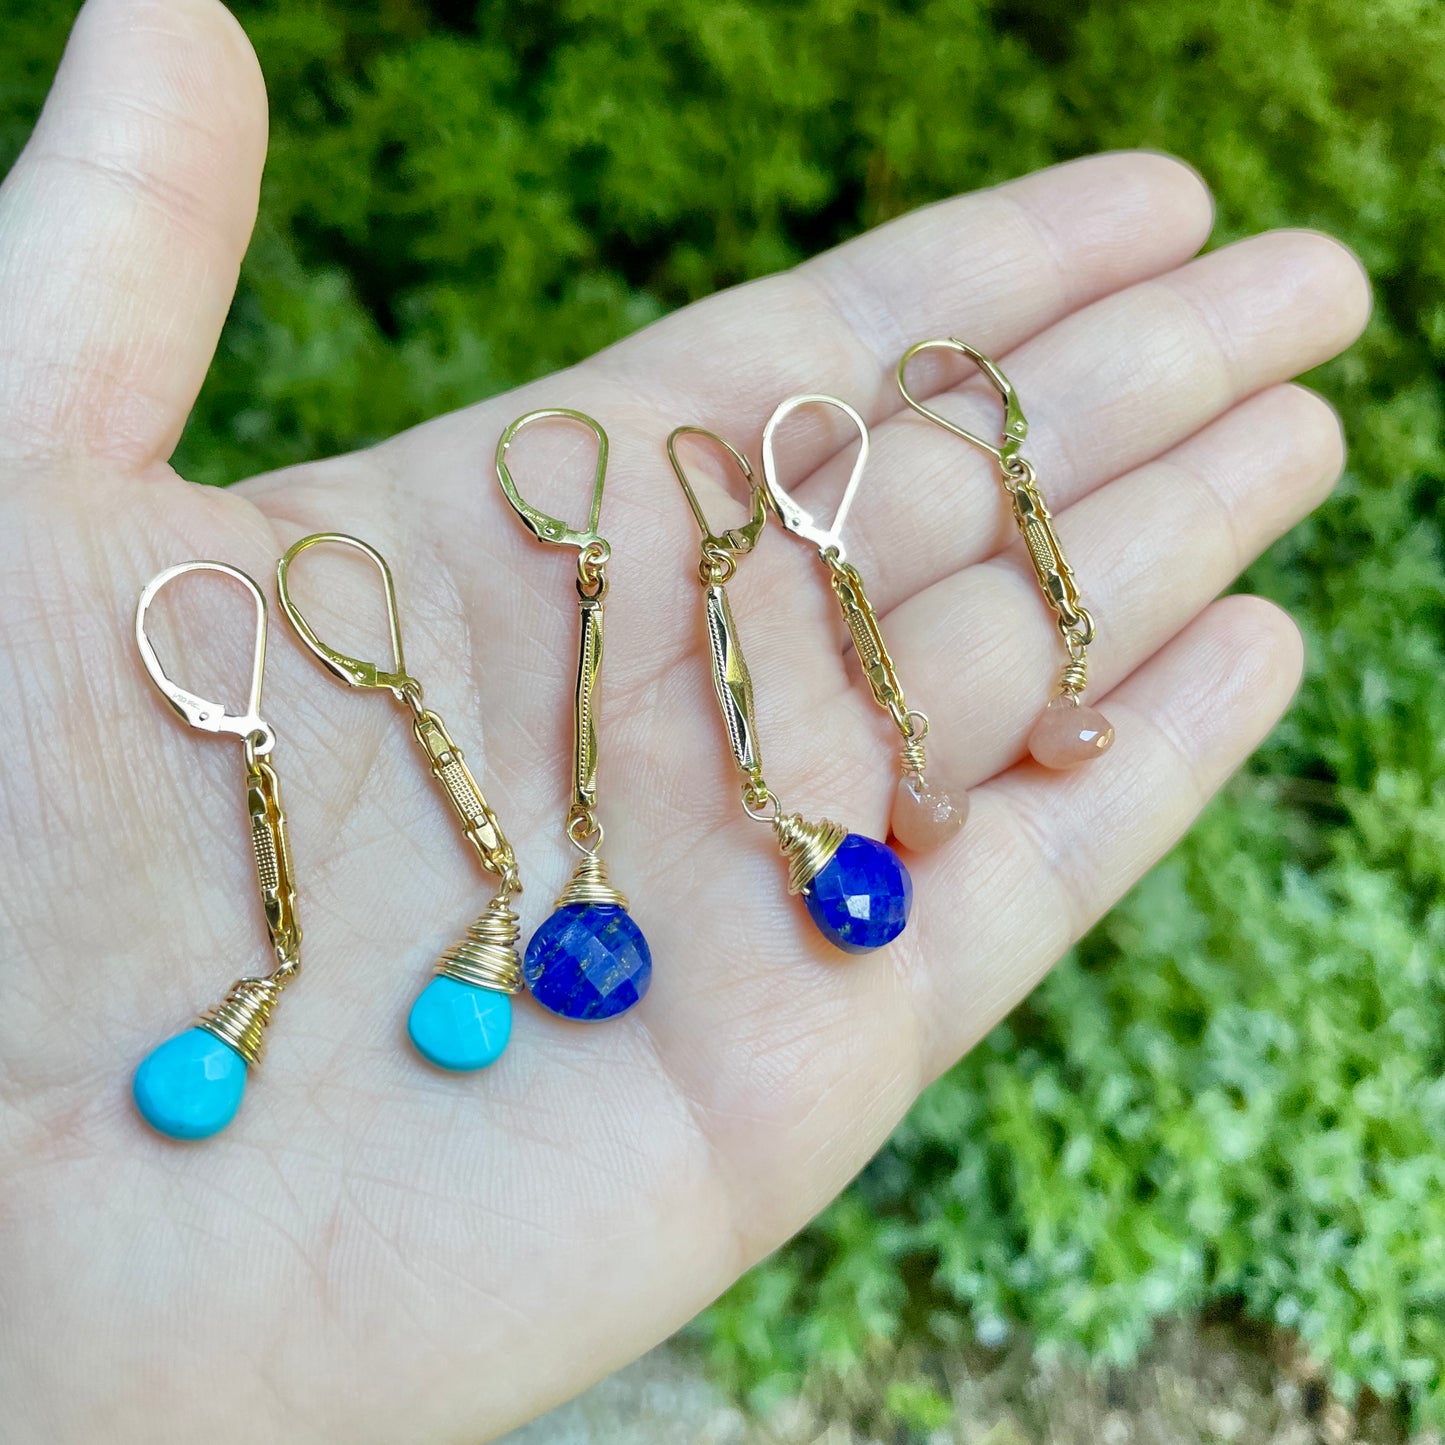 Edwardian Watch Chain and Lapis Lazuli Earrings